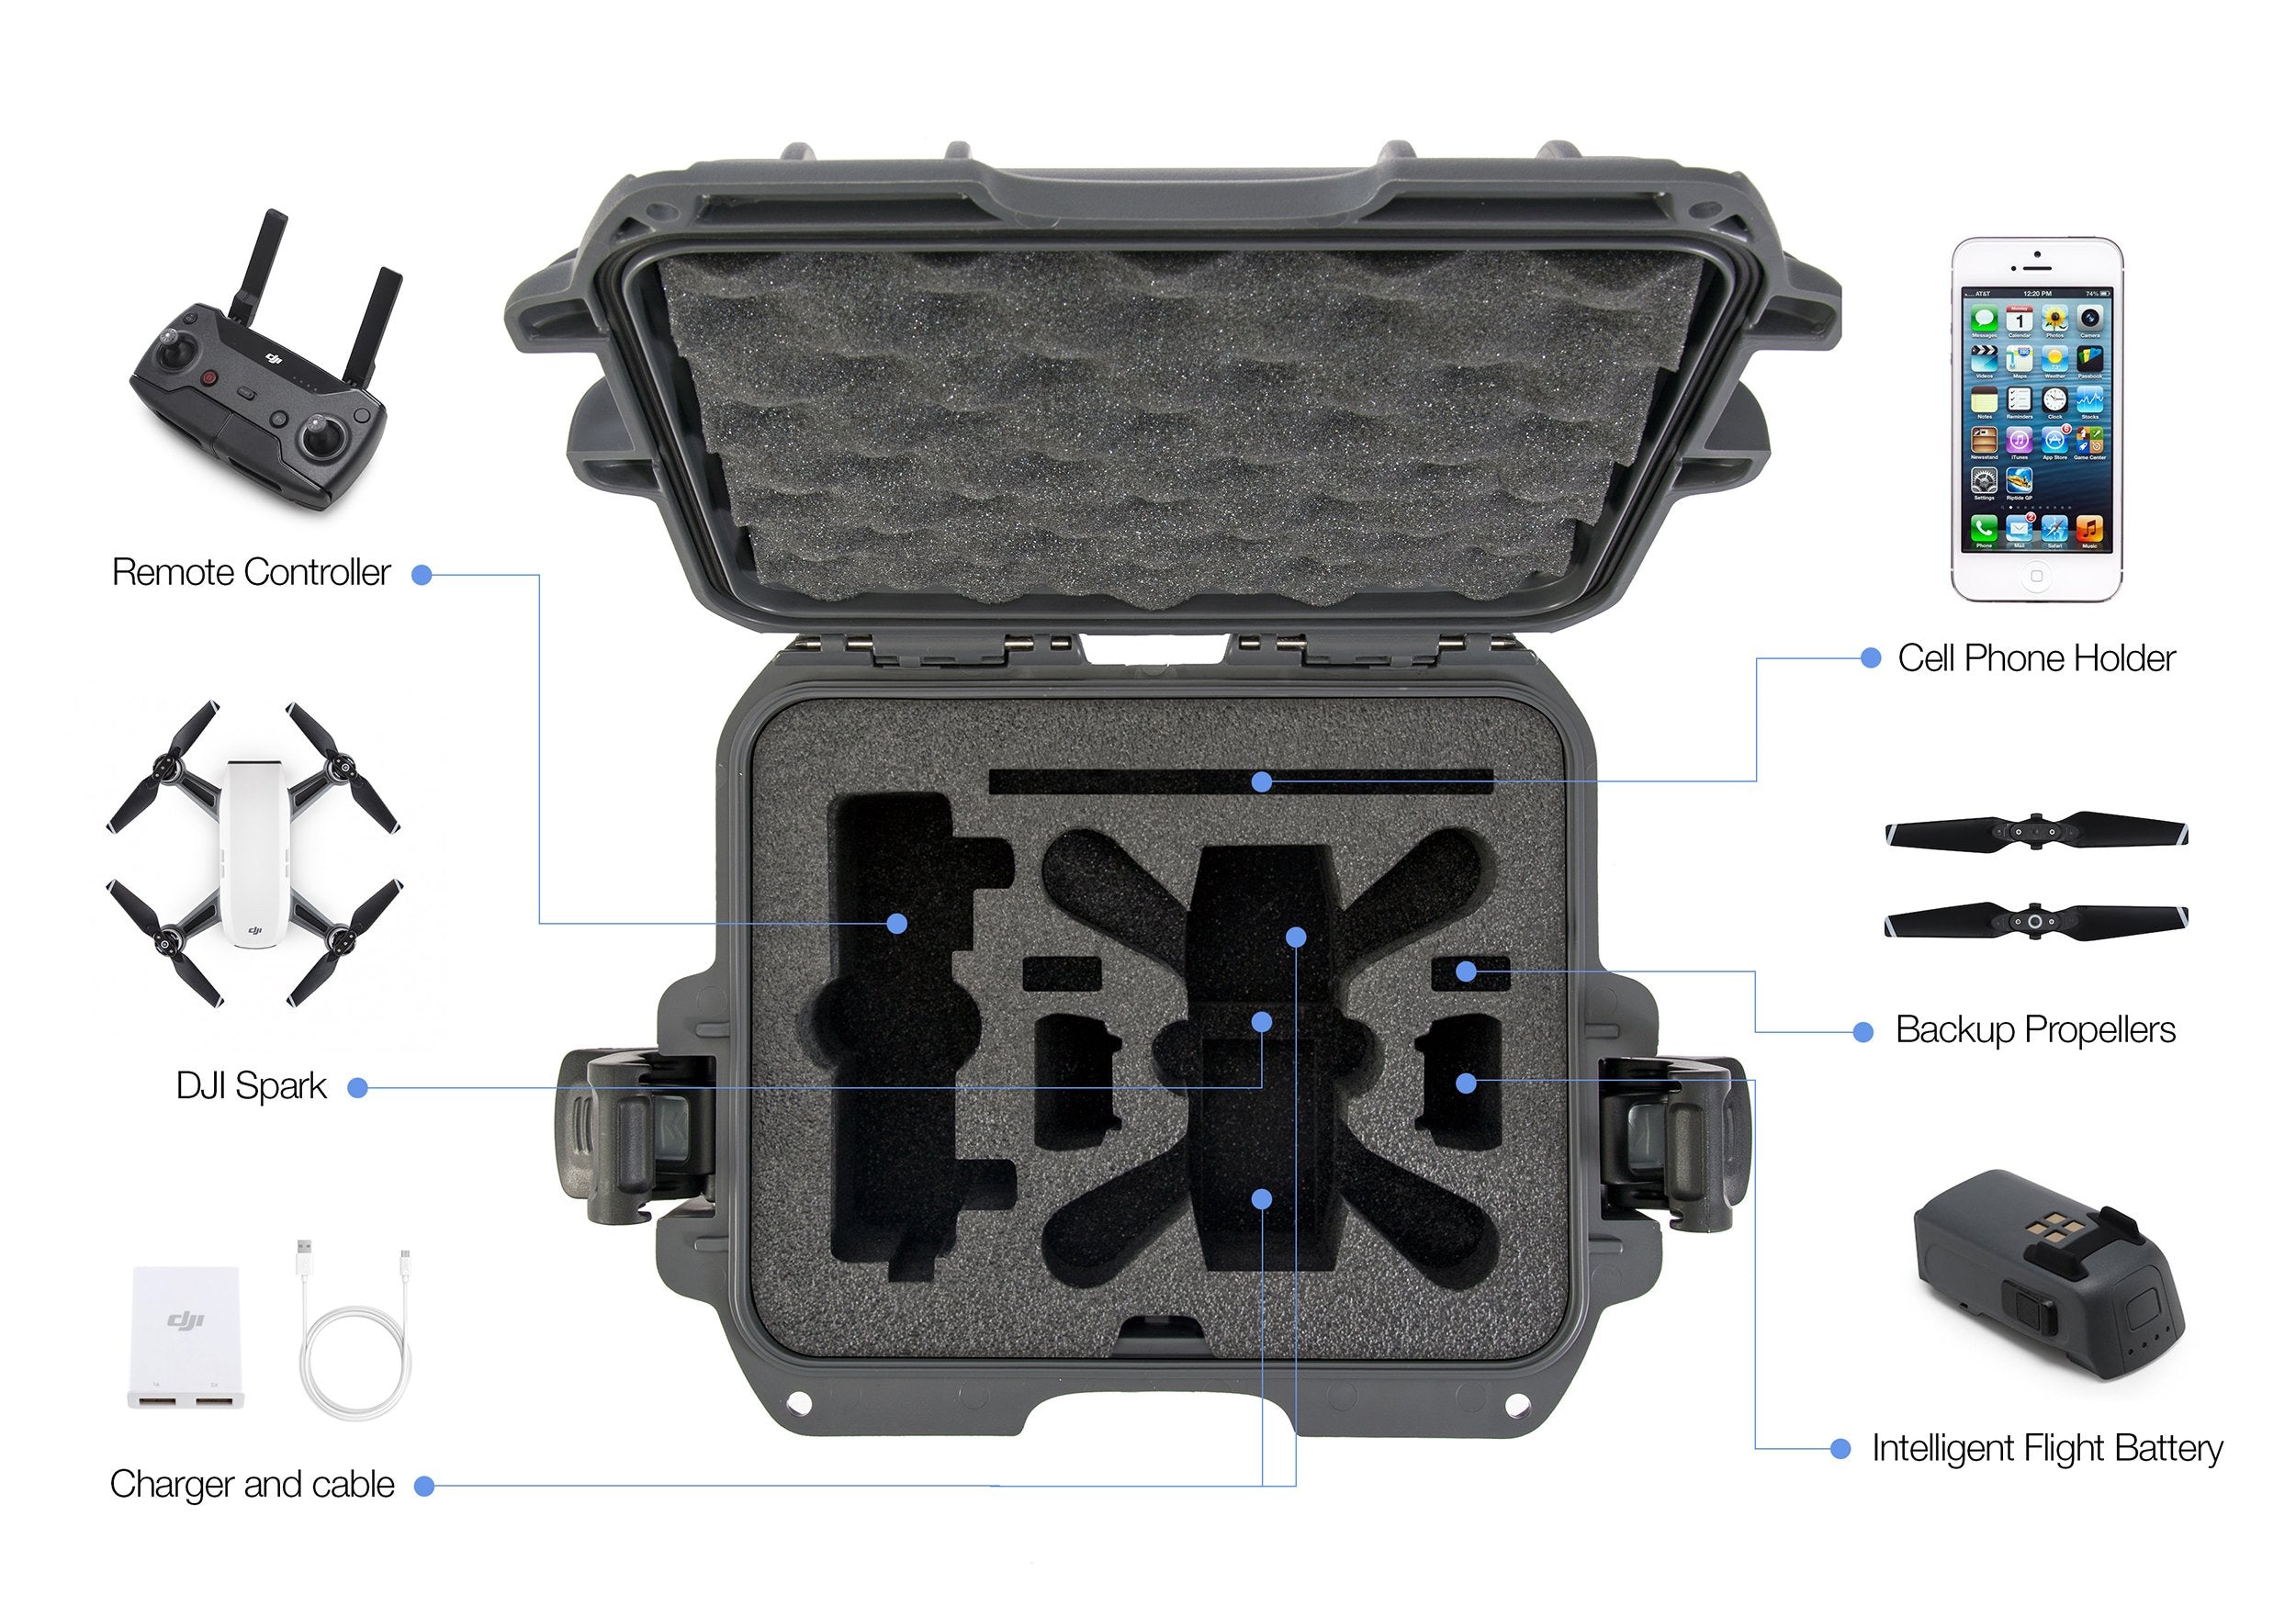 Nanuk 905 Waterproof Hard Drone Case with Custom Foam Insert for DJI Spark Graphite